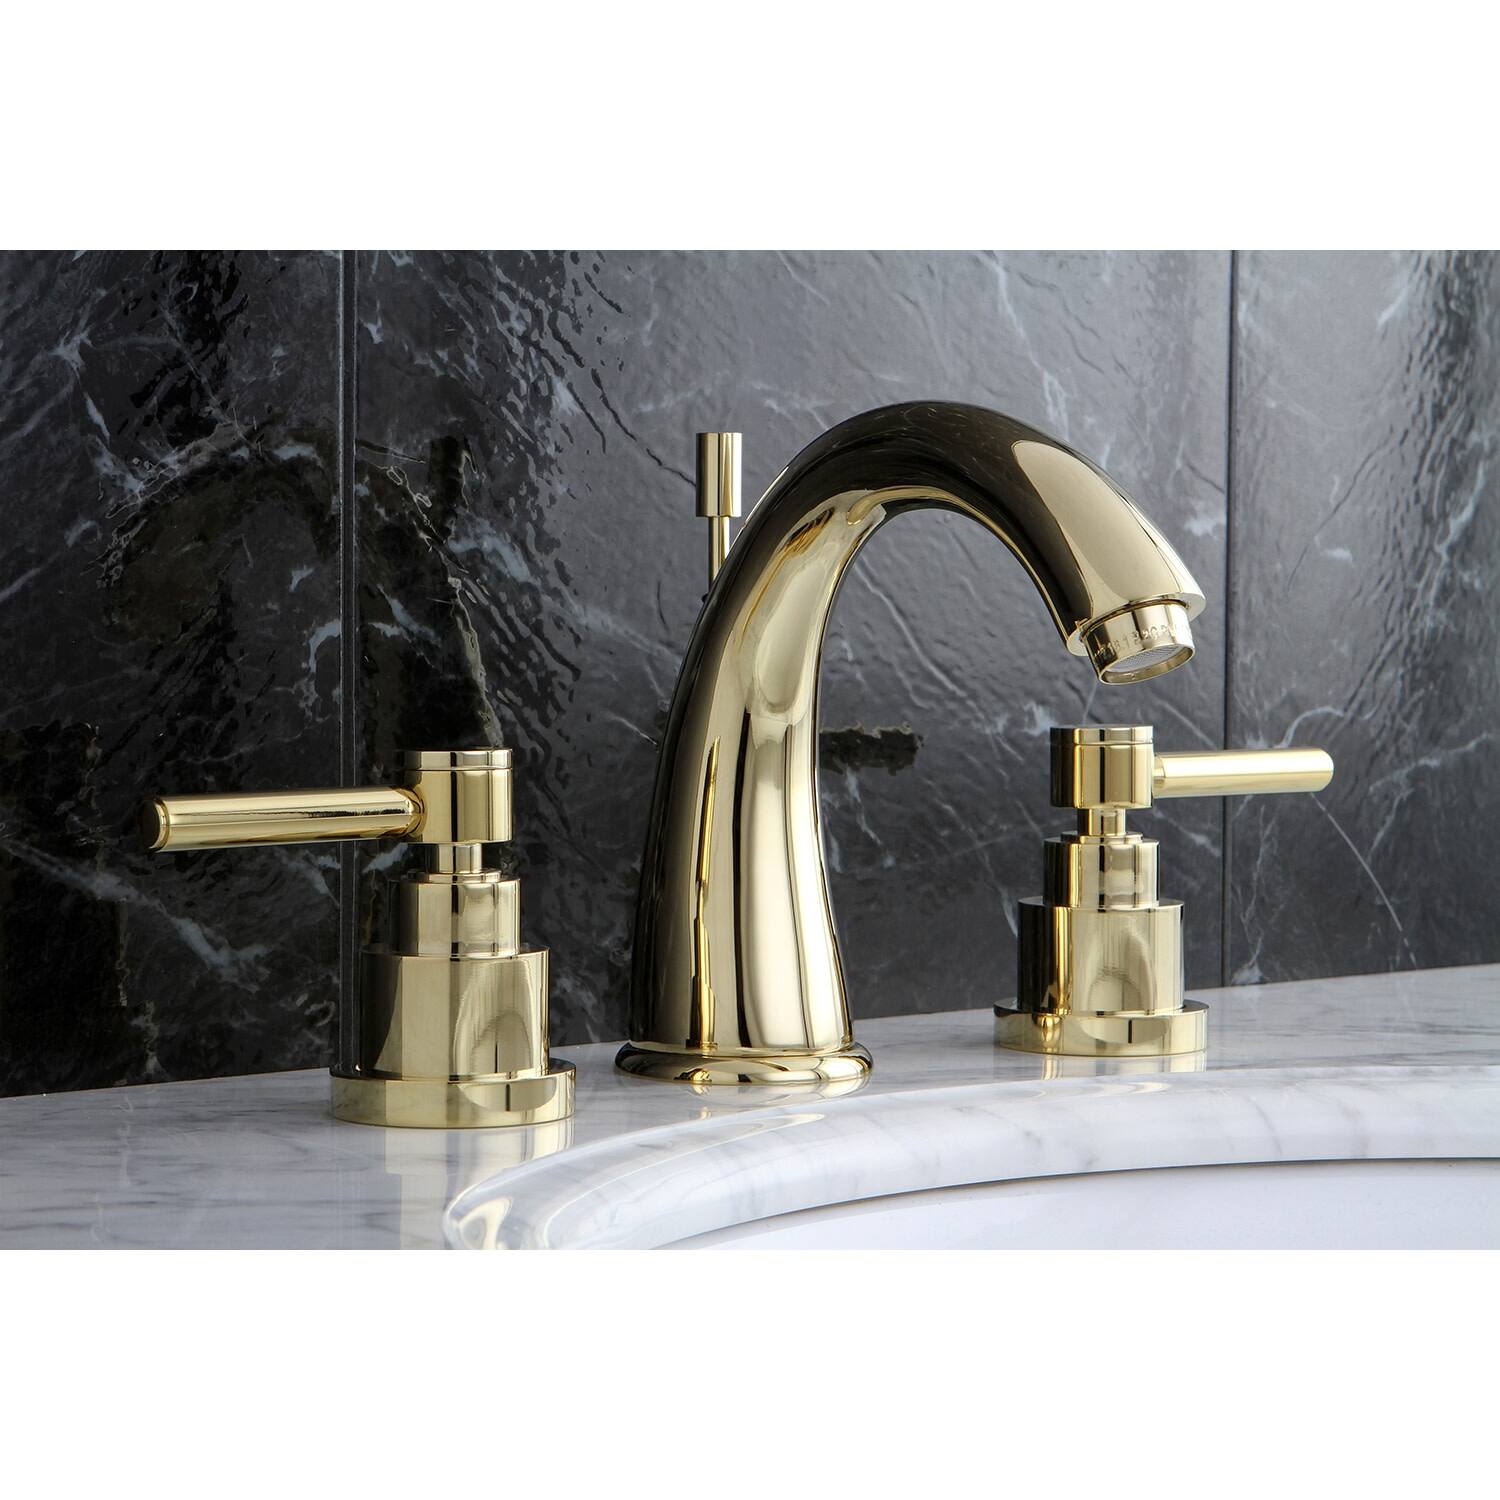 Elinvar Deck Mount Widespread Bathroom Faucet with Brass Pop-Up